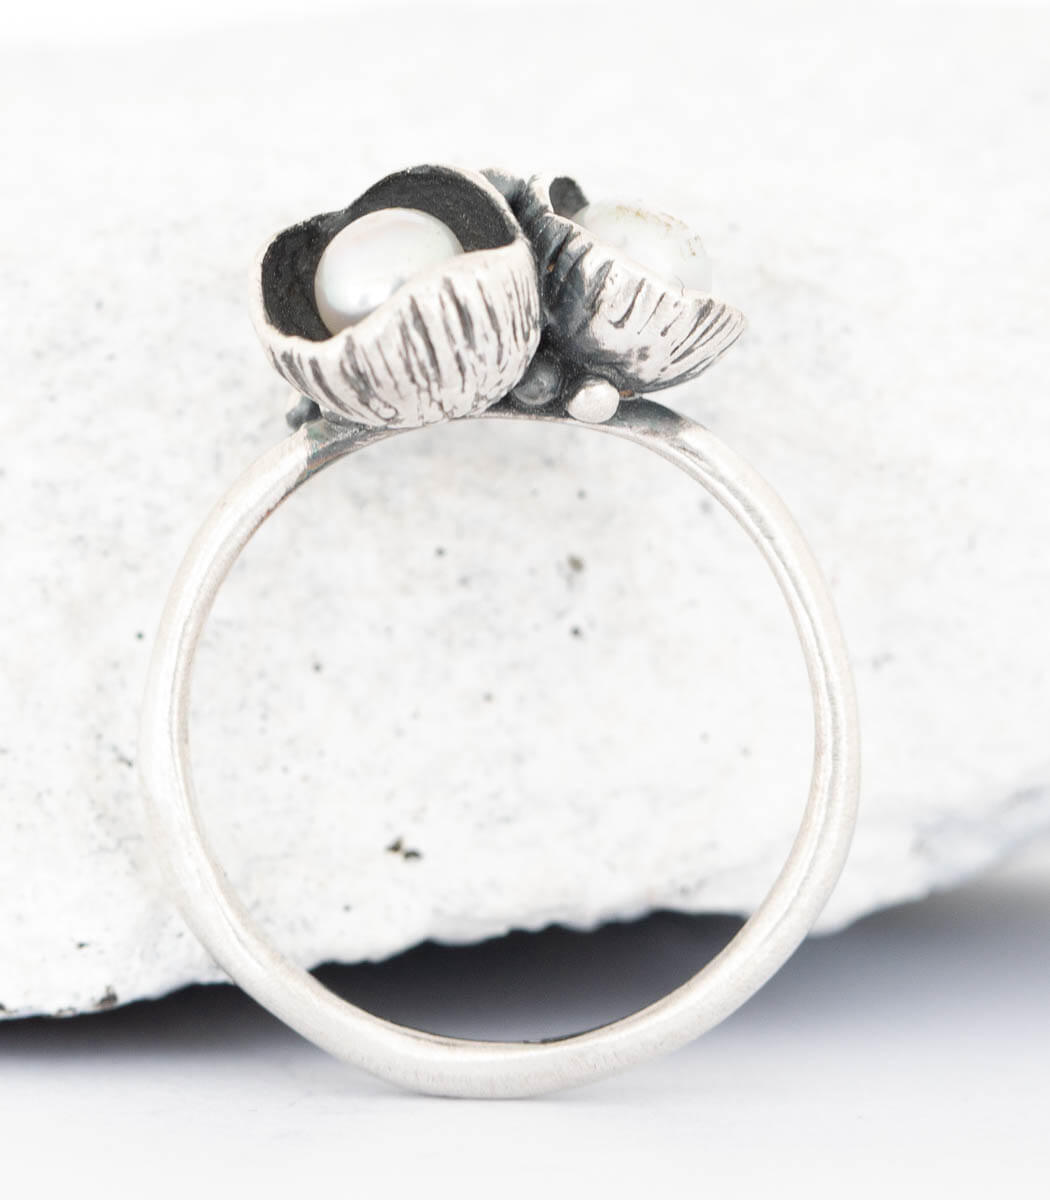 Silber Ring Blütenkelch Gr. 56